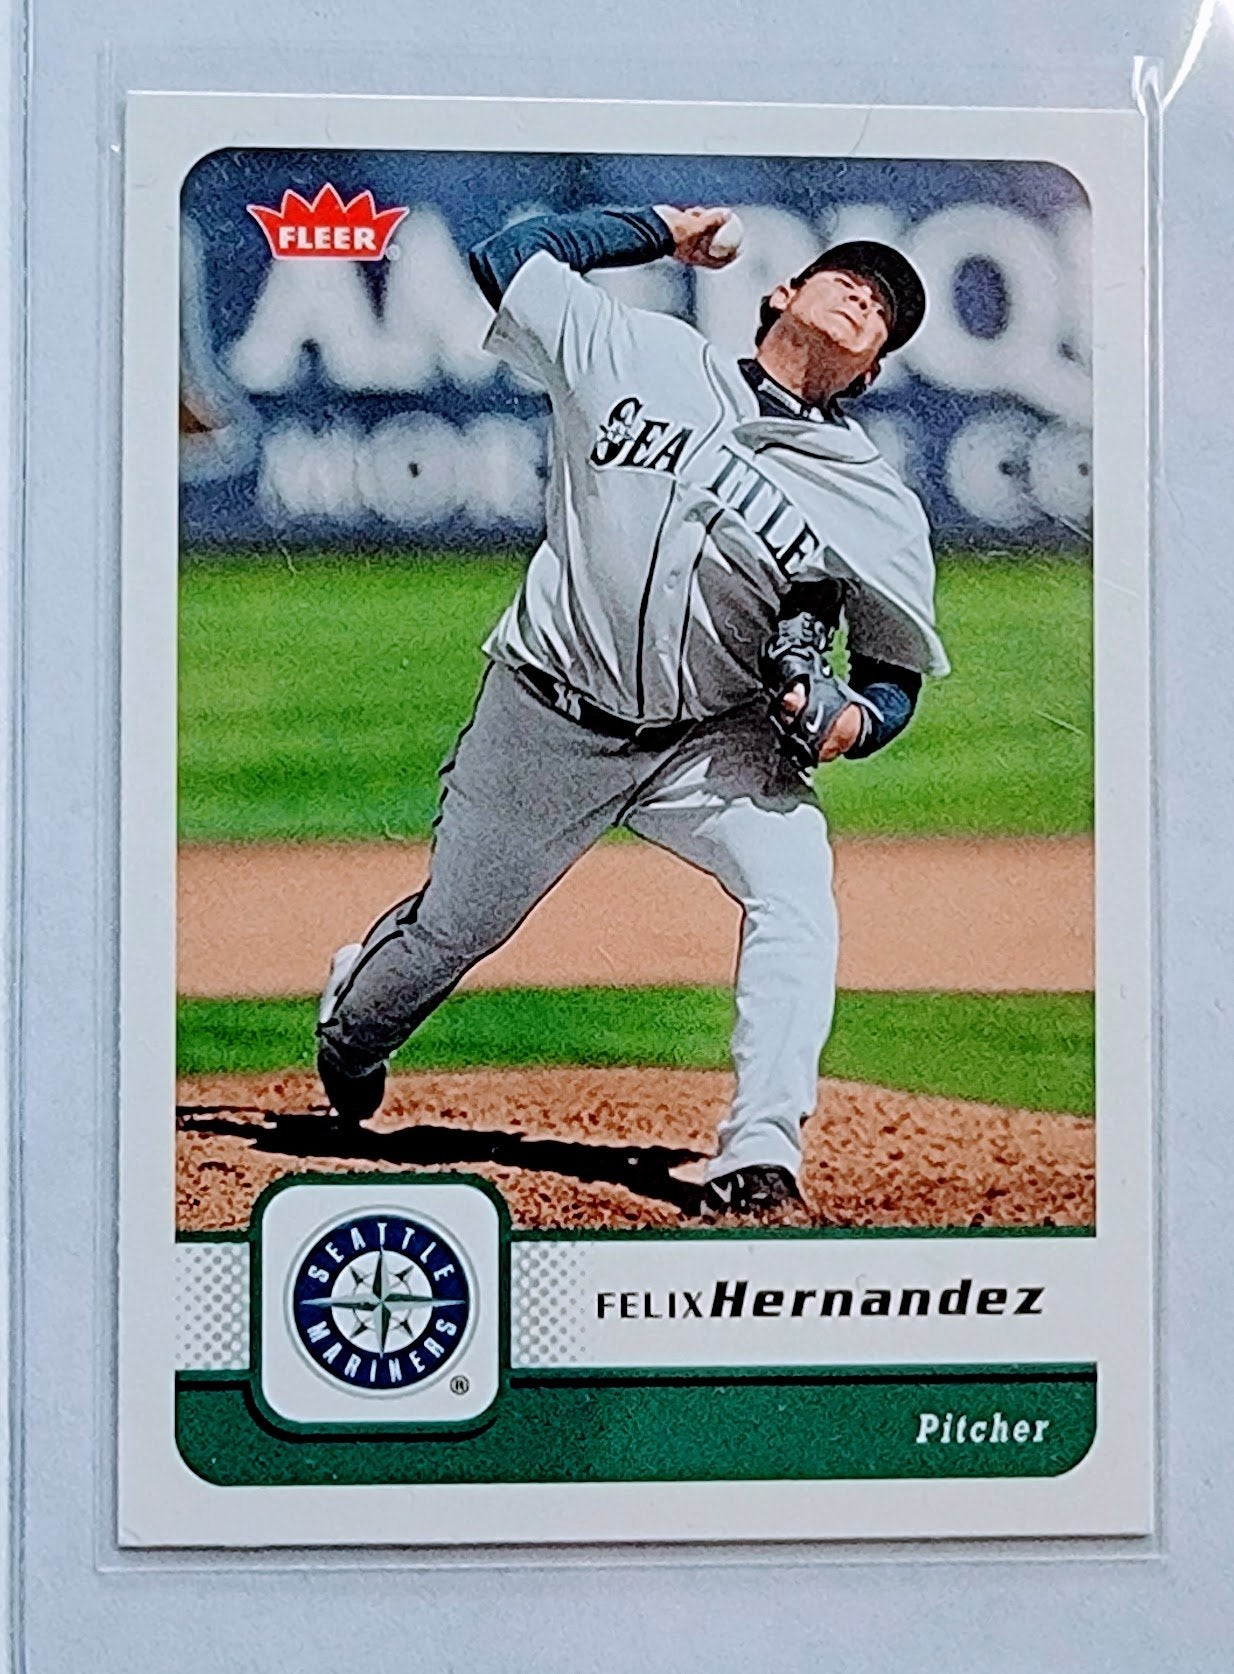 2006 Fleer Baseball Felix Hernandez #179 Baseball Card TPTV simple Xclusive Collectibles   